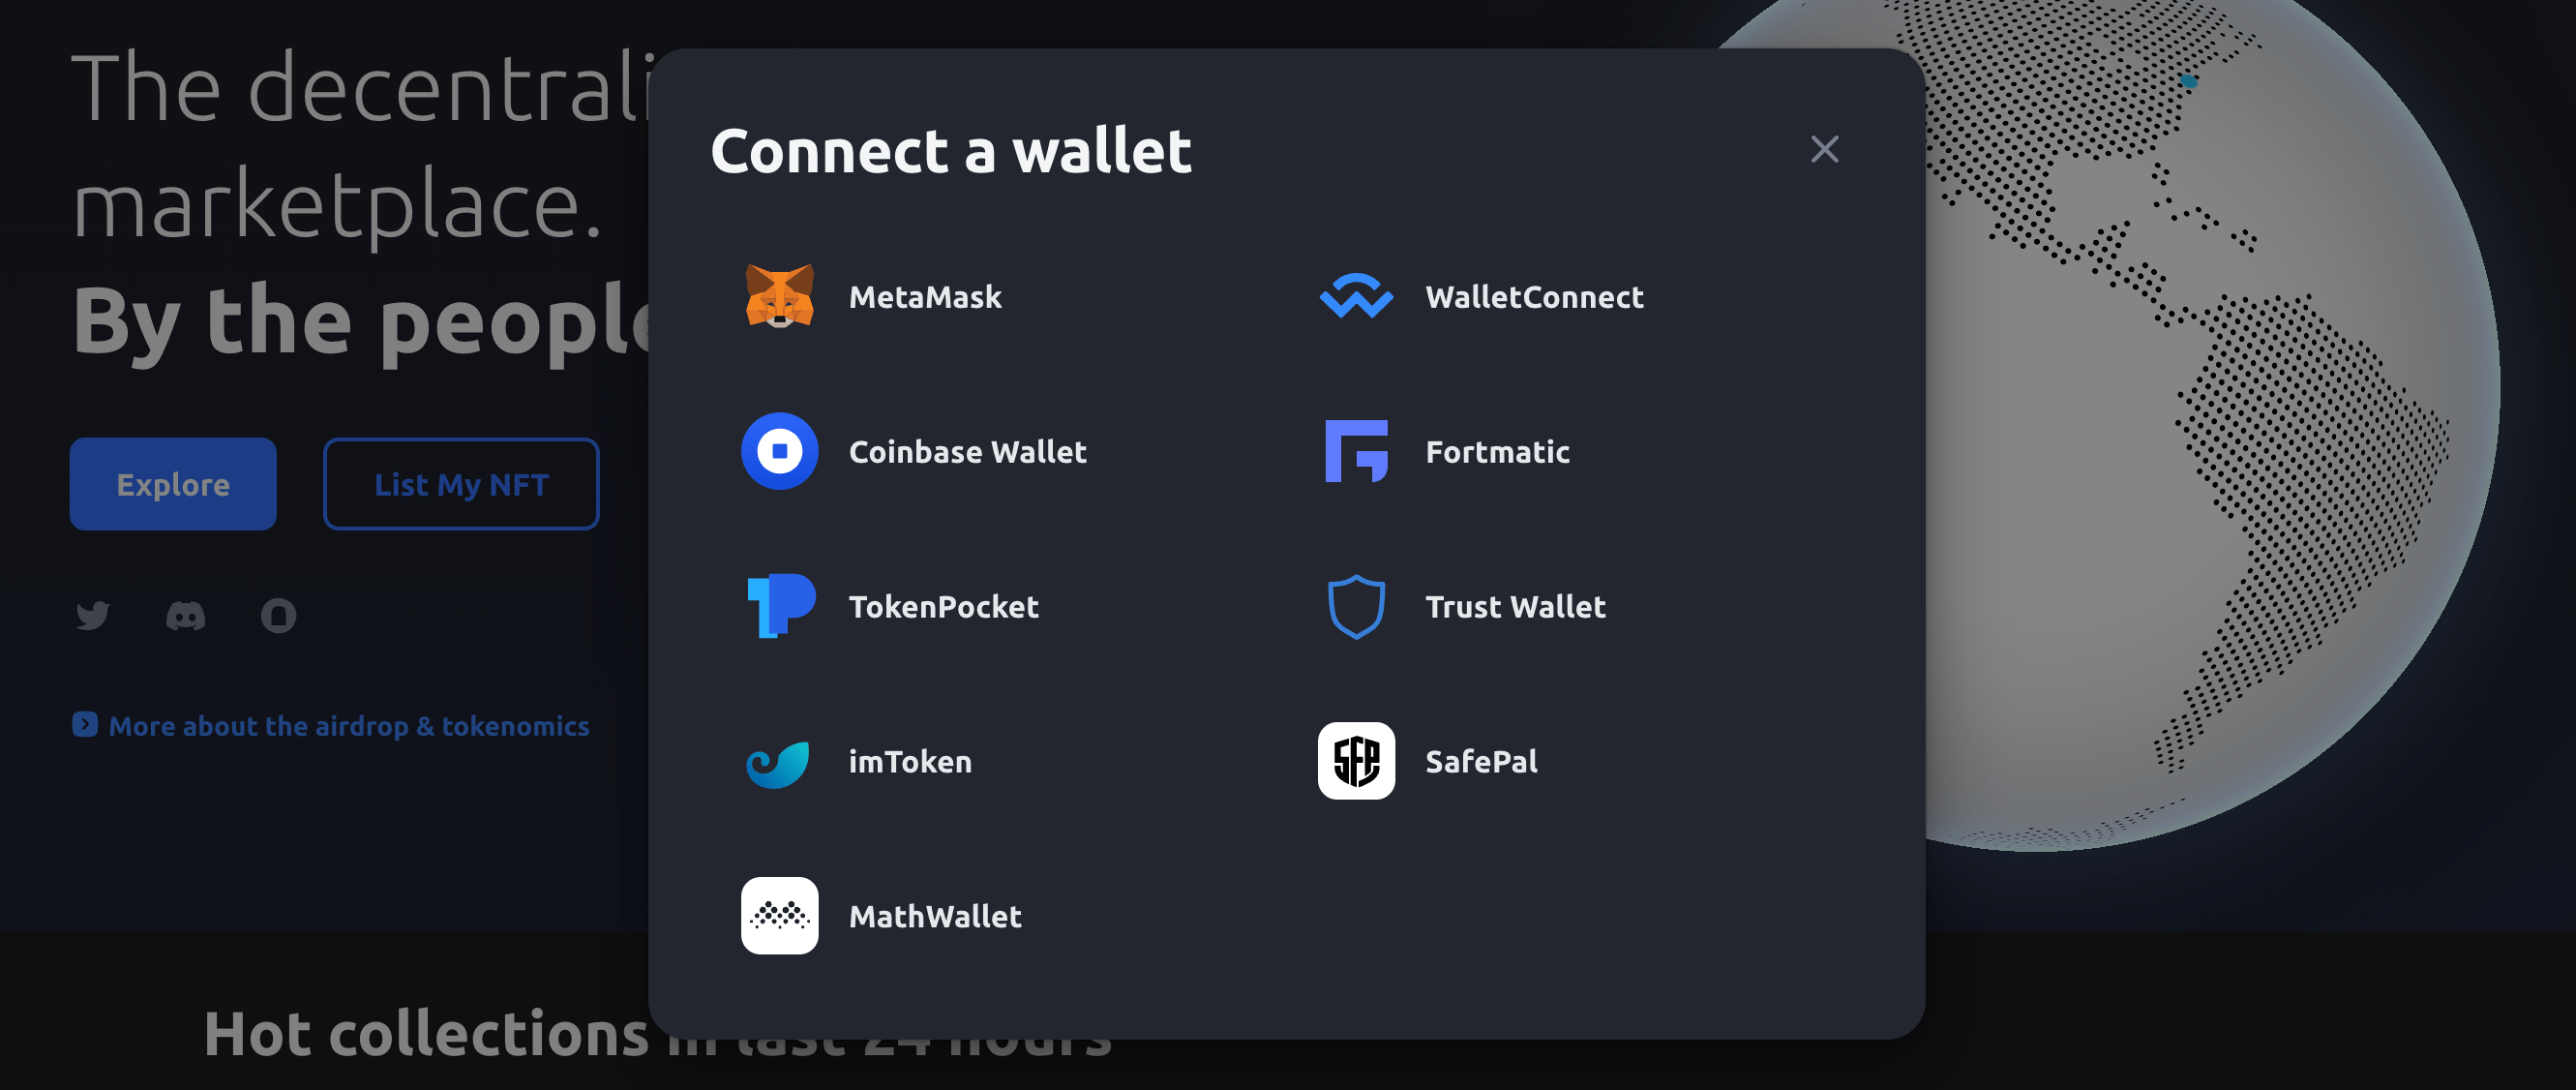 Select wallet